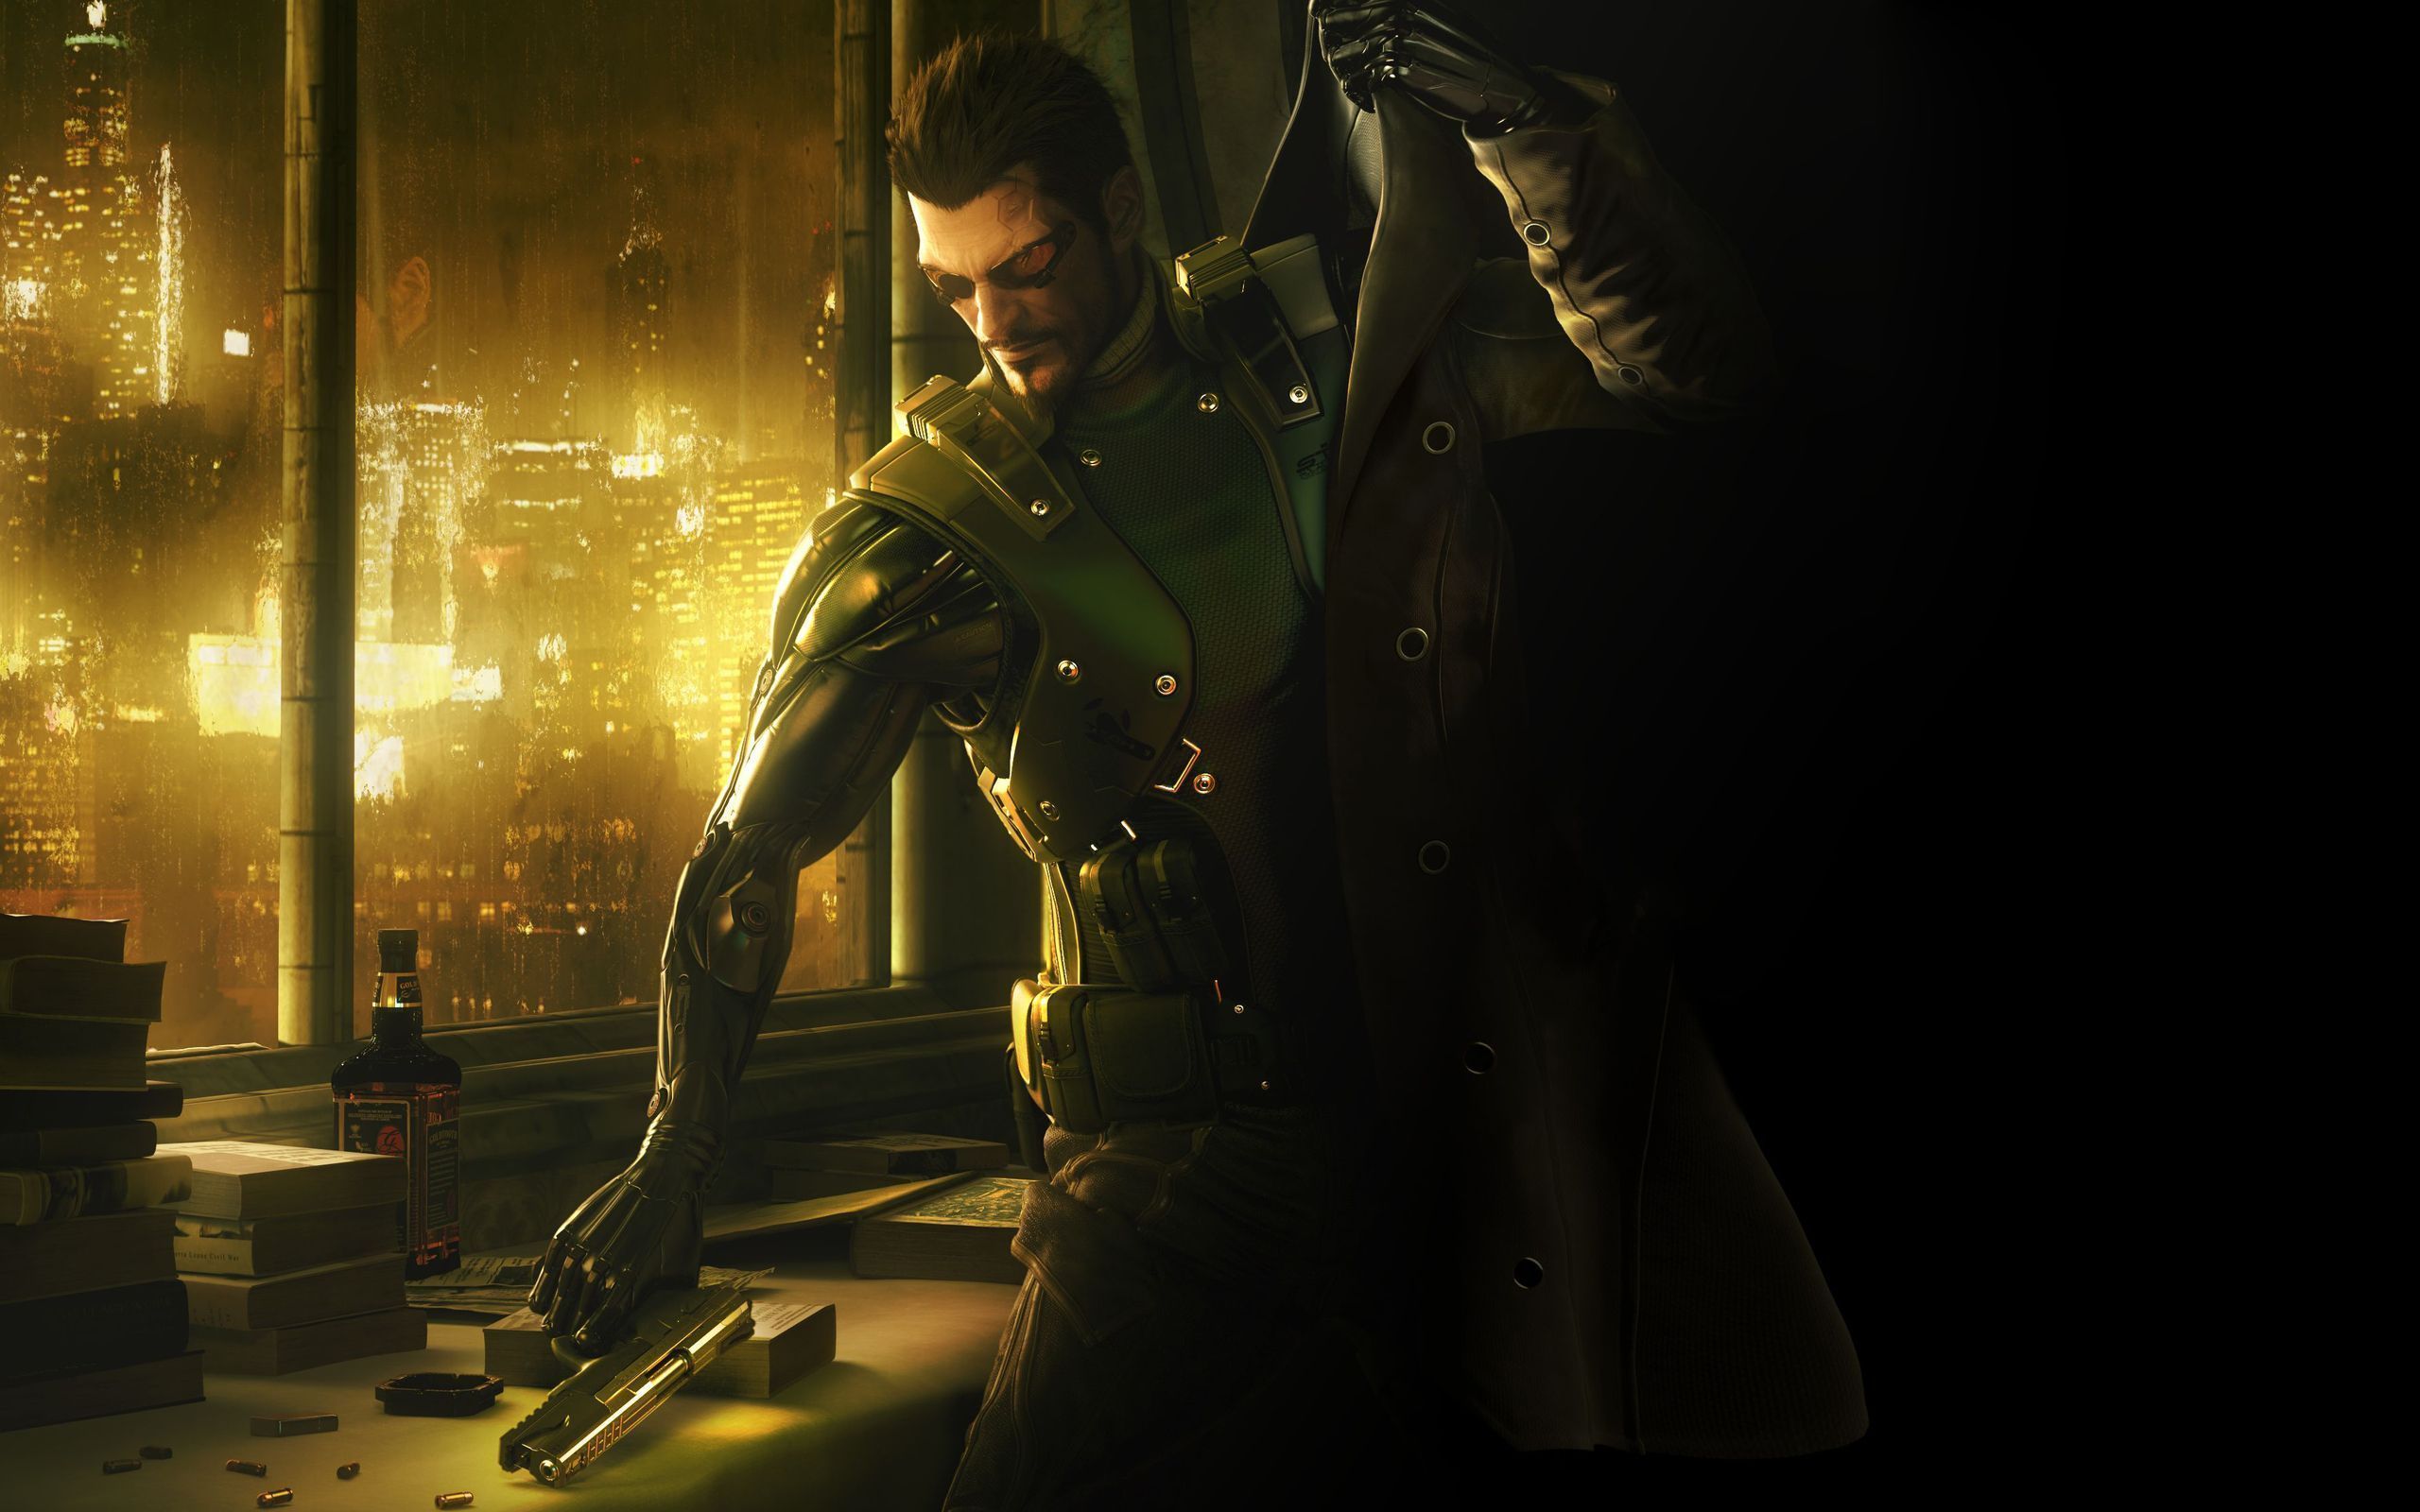 Deus Ex Human Revolution Game Background wallpaper by chococruise